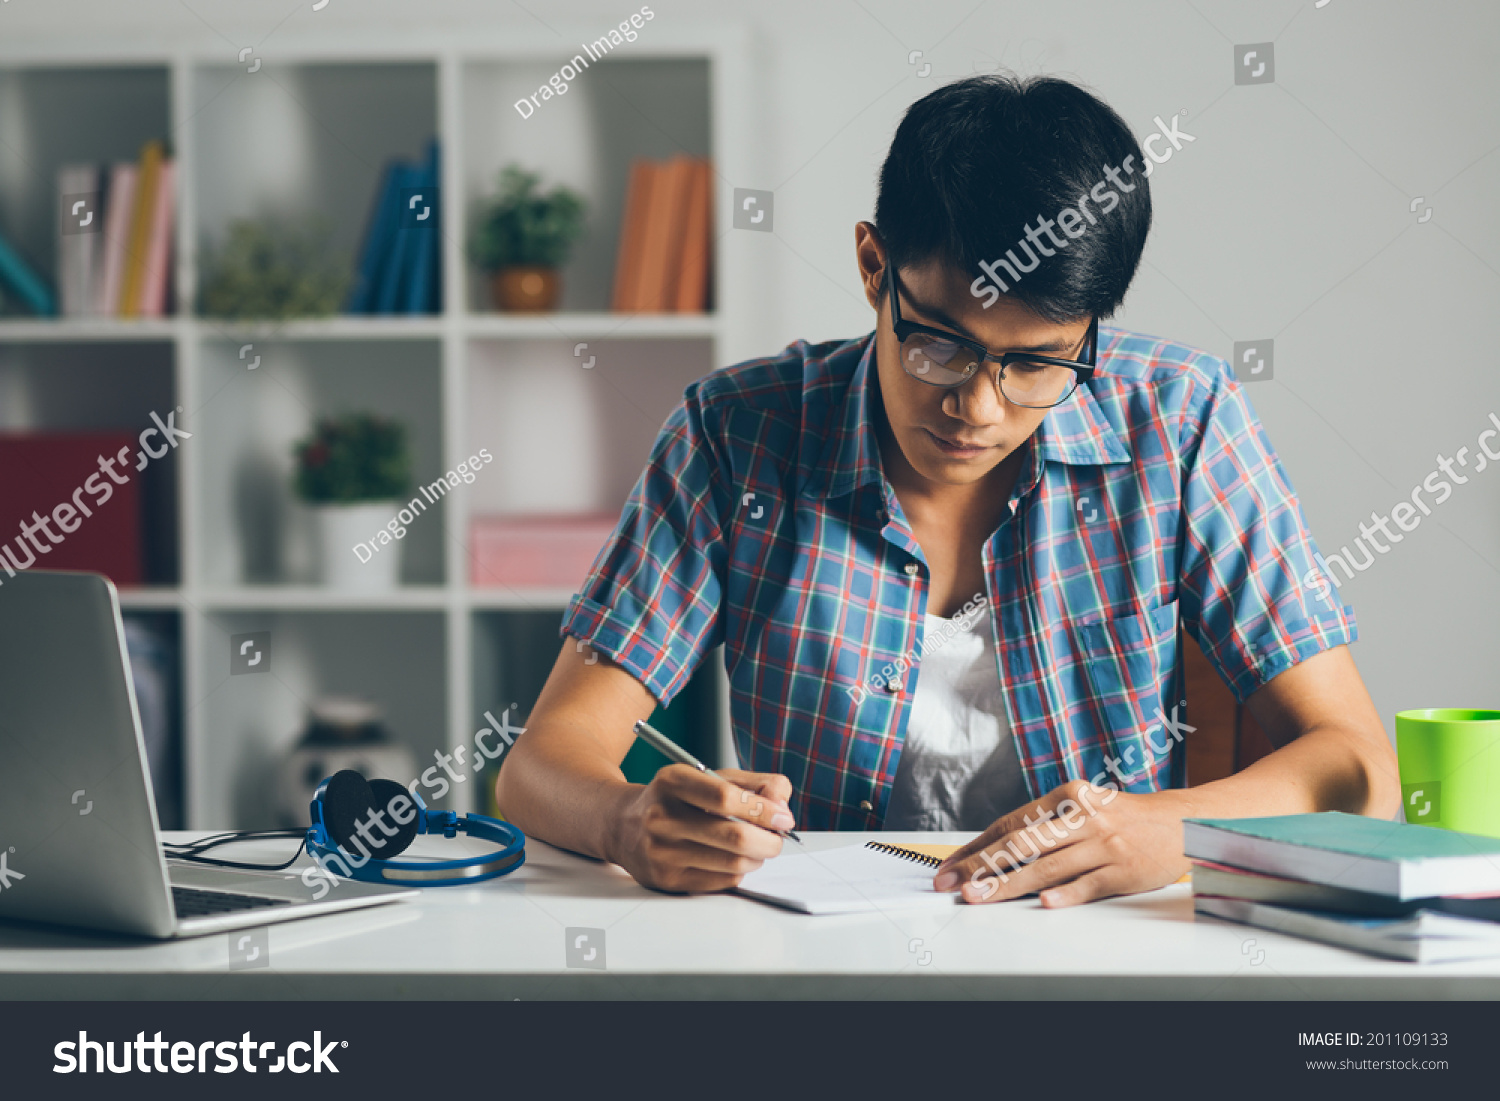 Students doing Homework